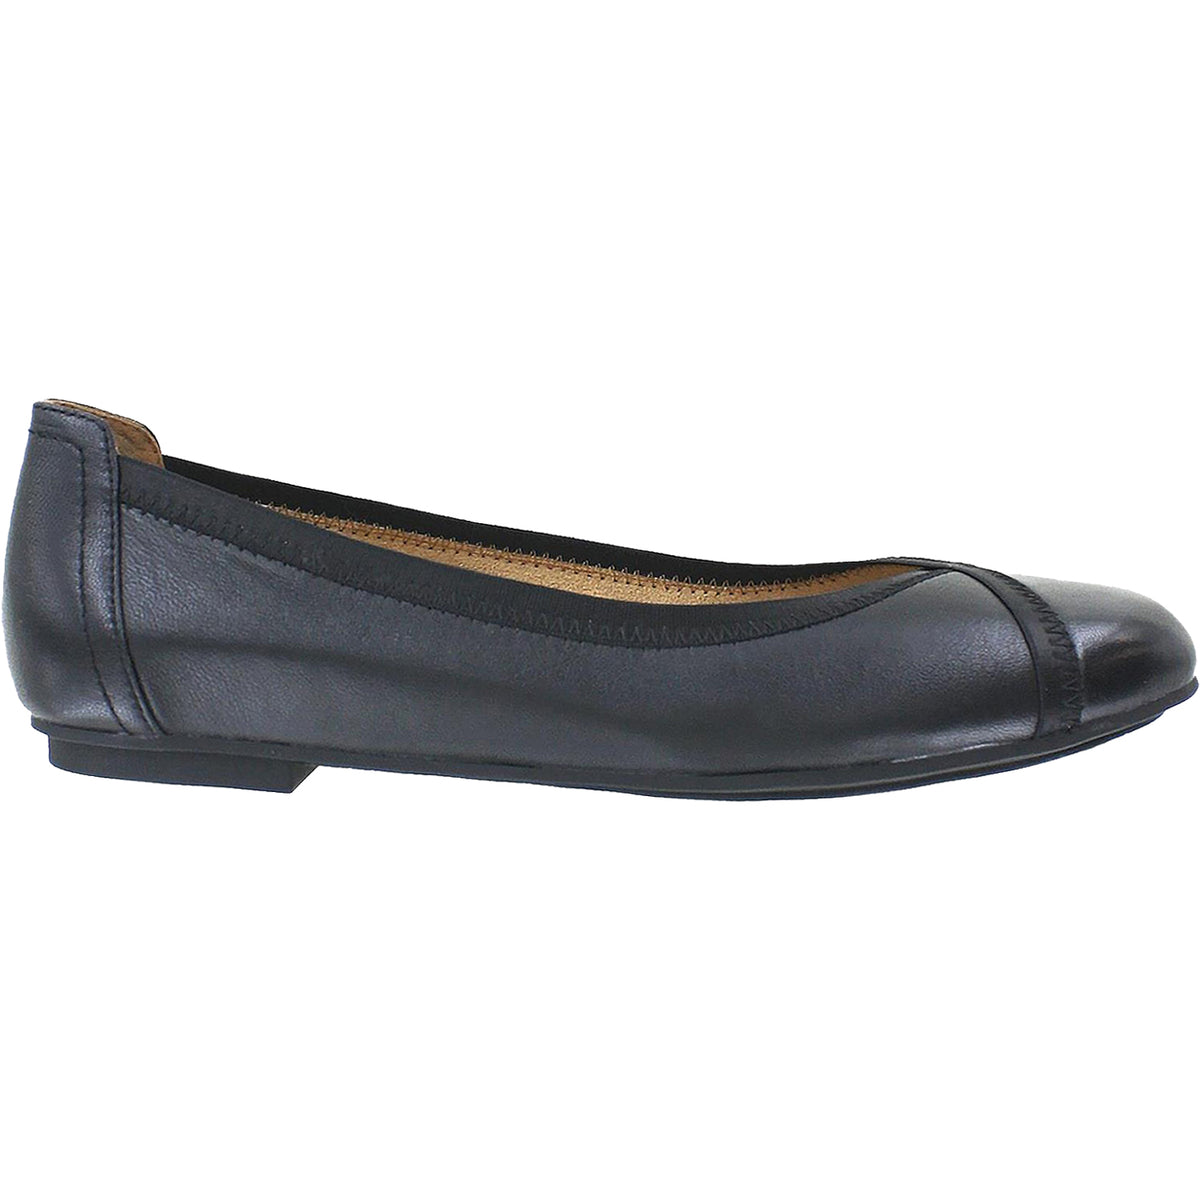 Vionic Caroll Shoes | Vionic Women's Slip-On Flats | Footwear etc ...